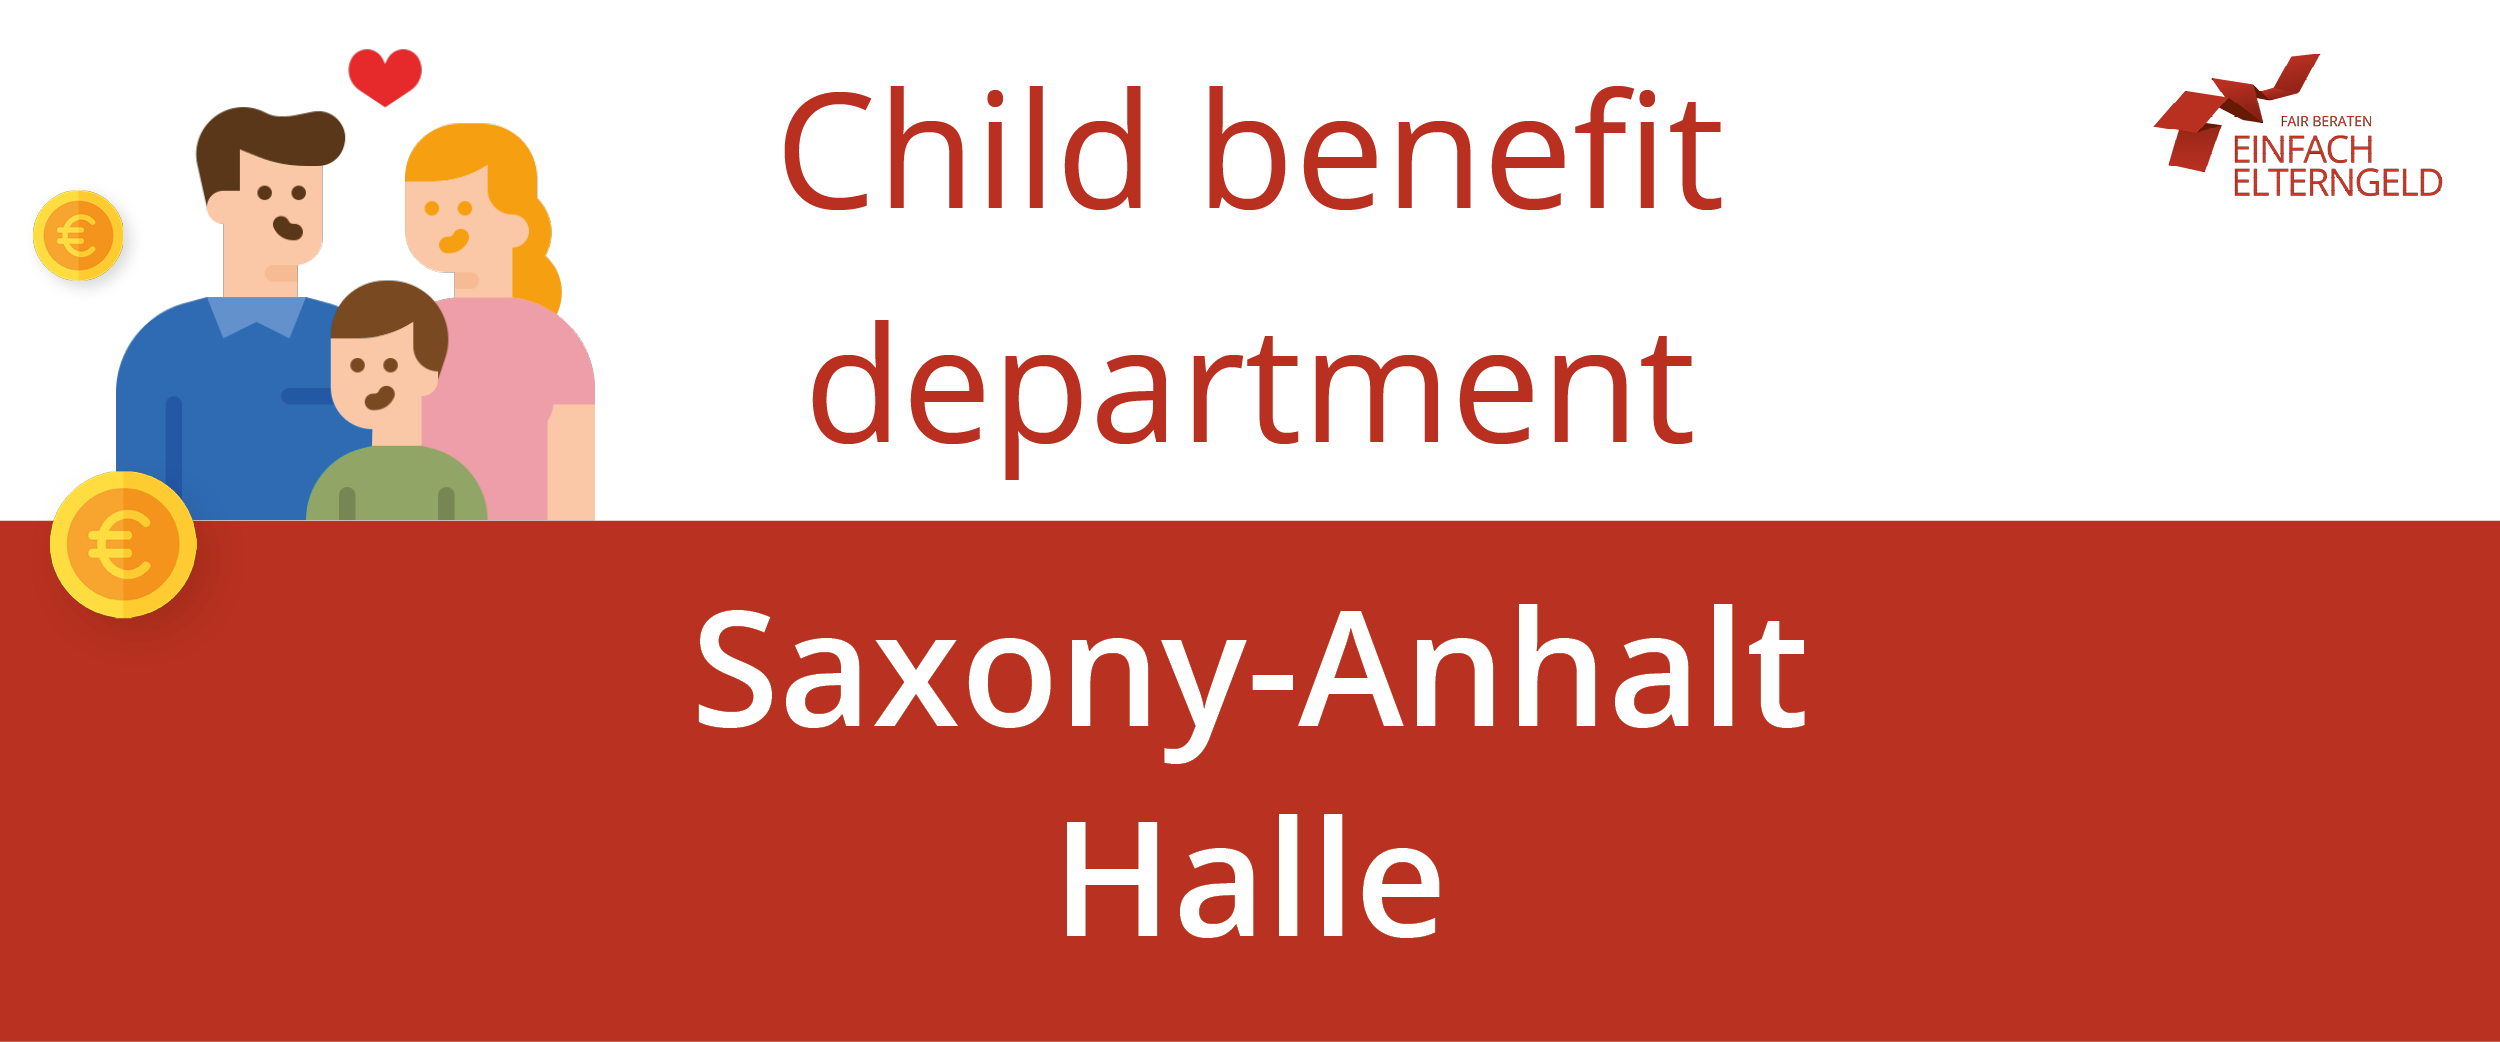 We present you the Child benefit department Saxony-Anhalt Halle.